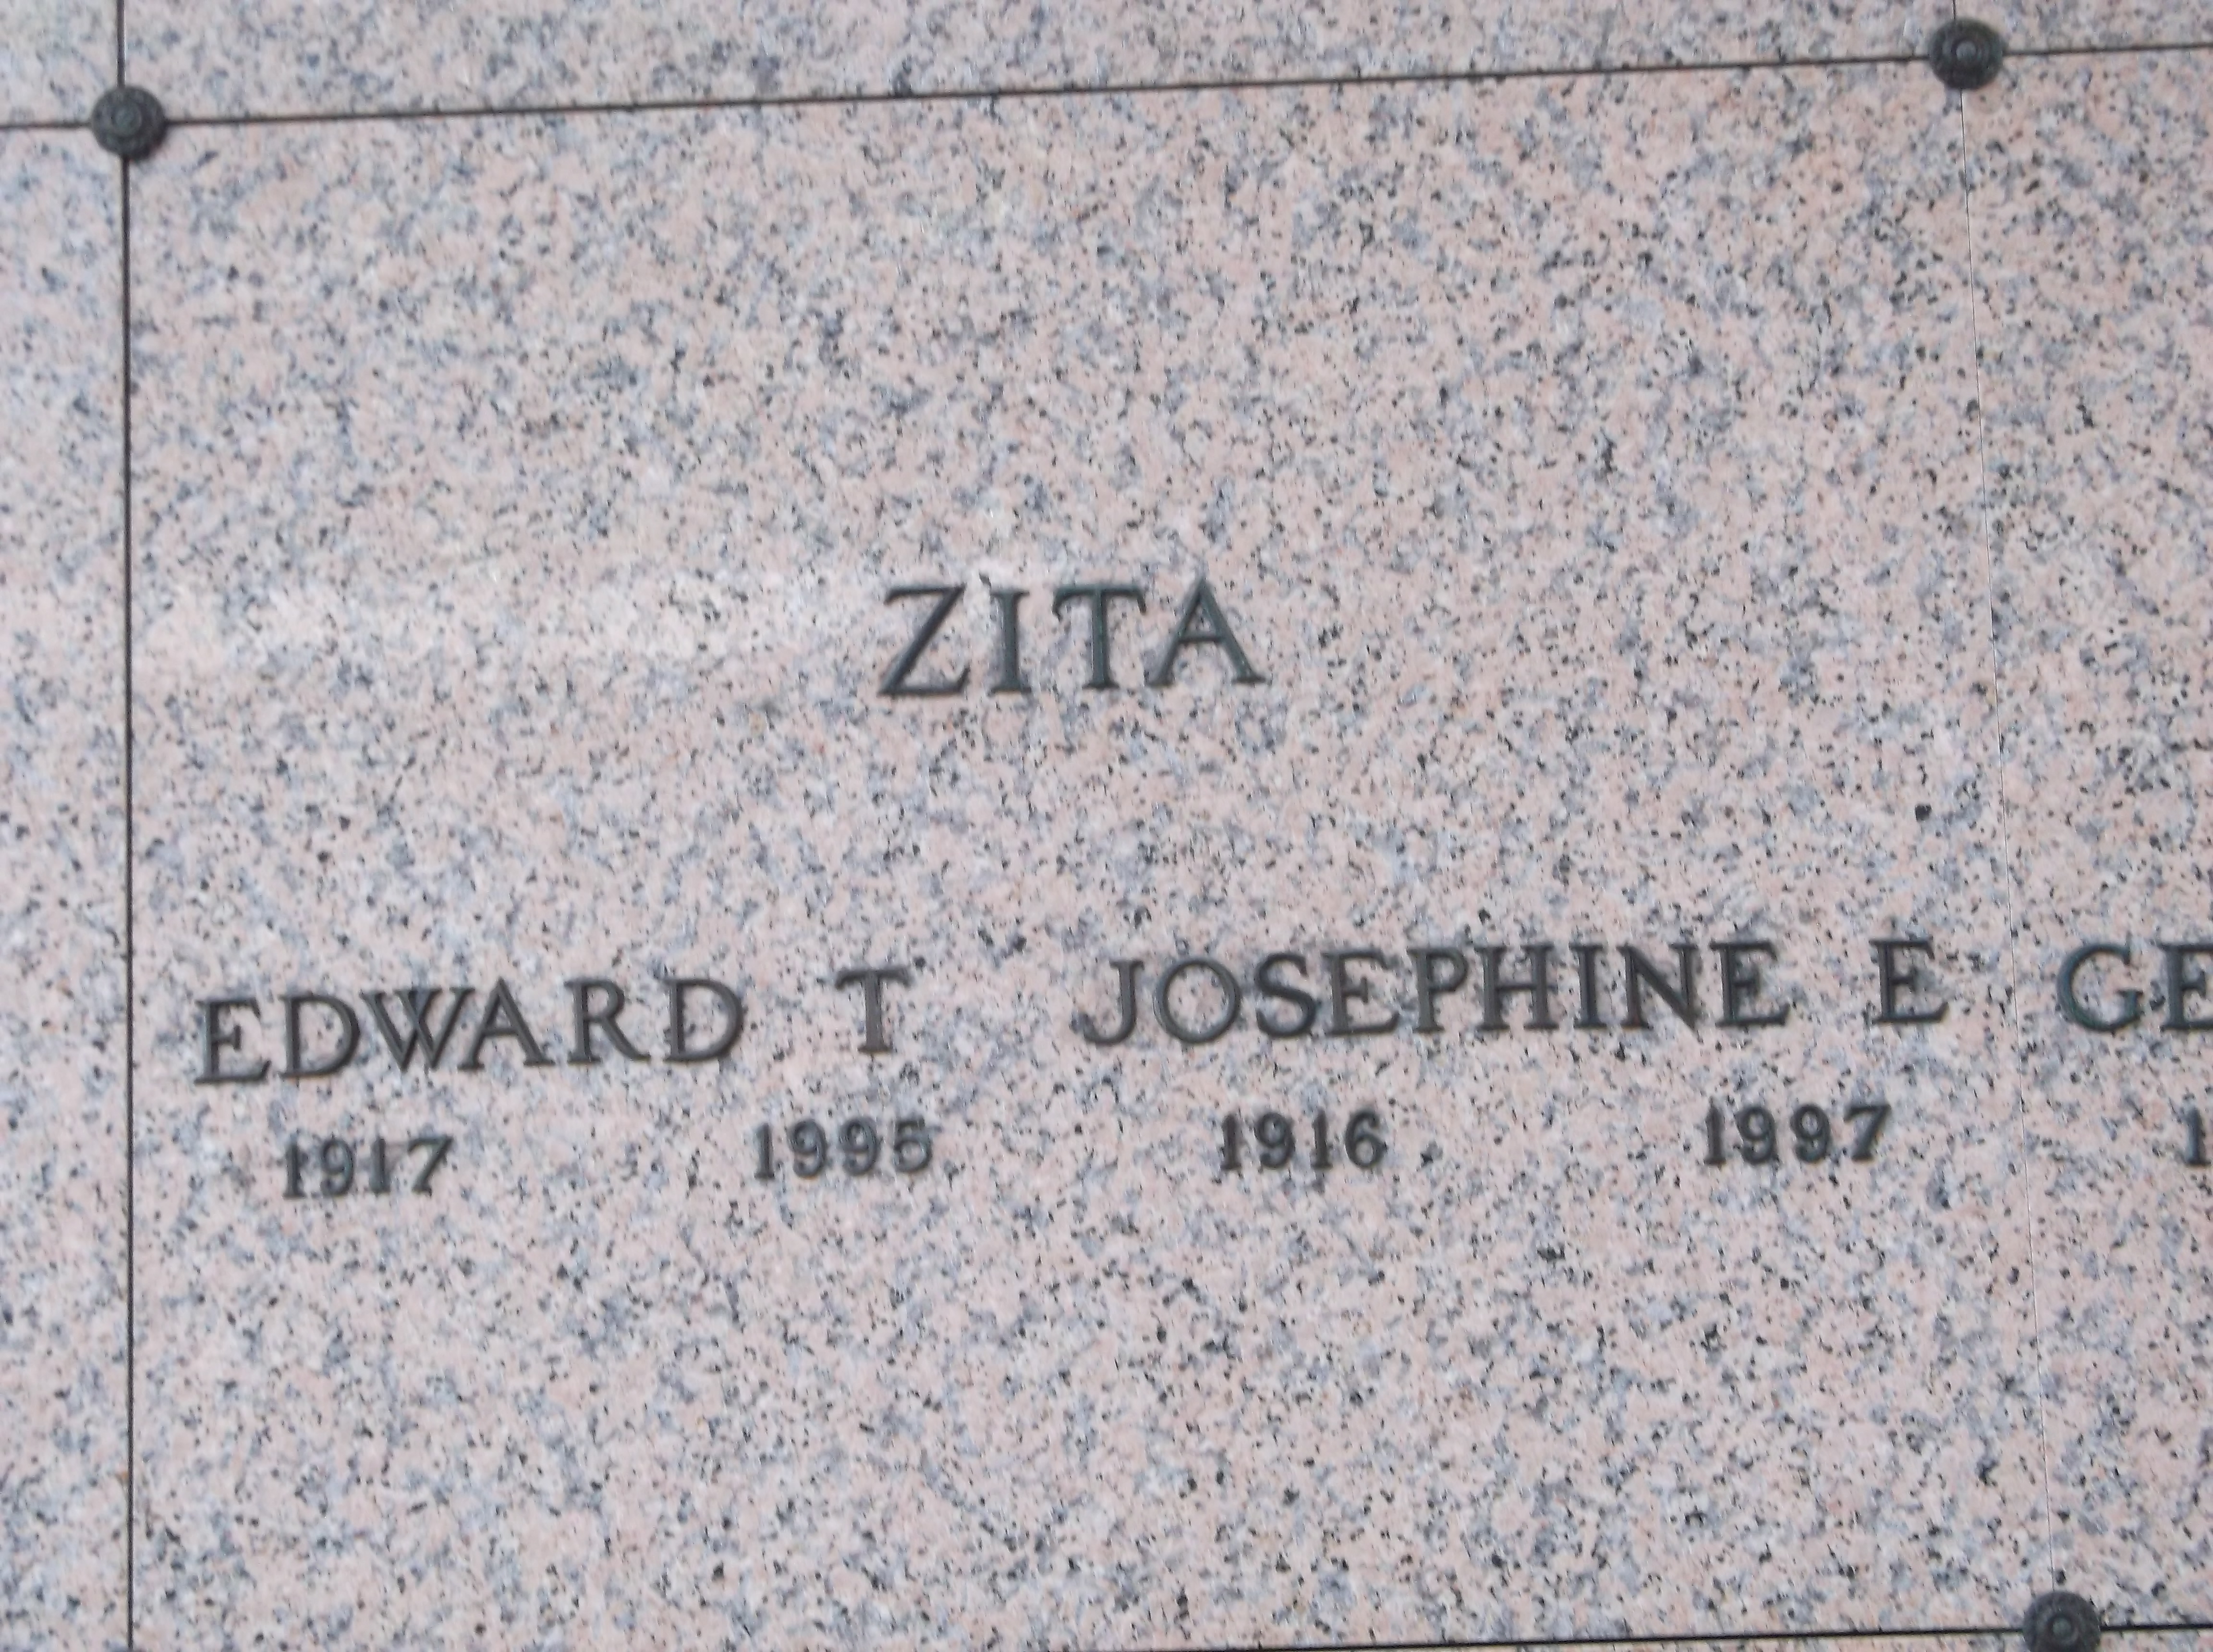 Edward T Zita